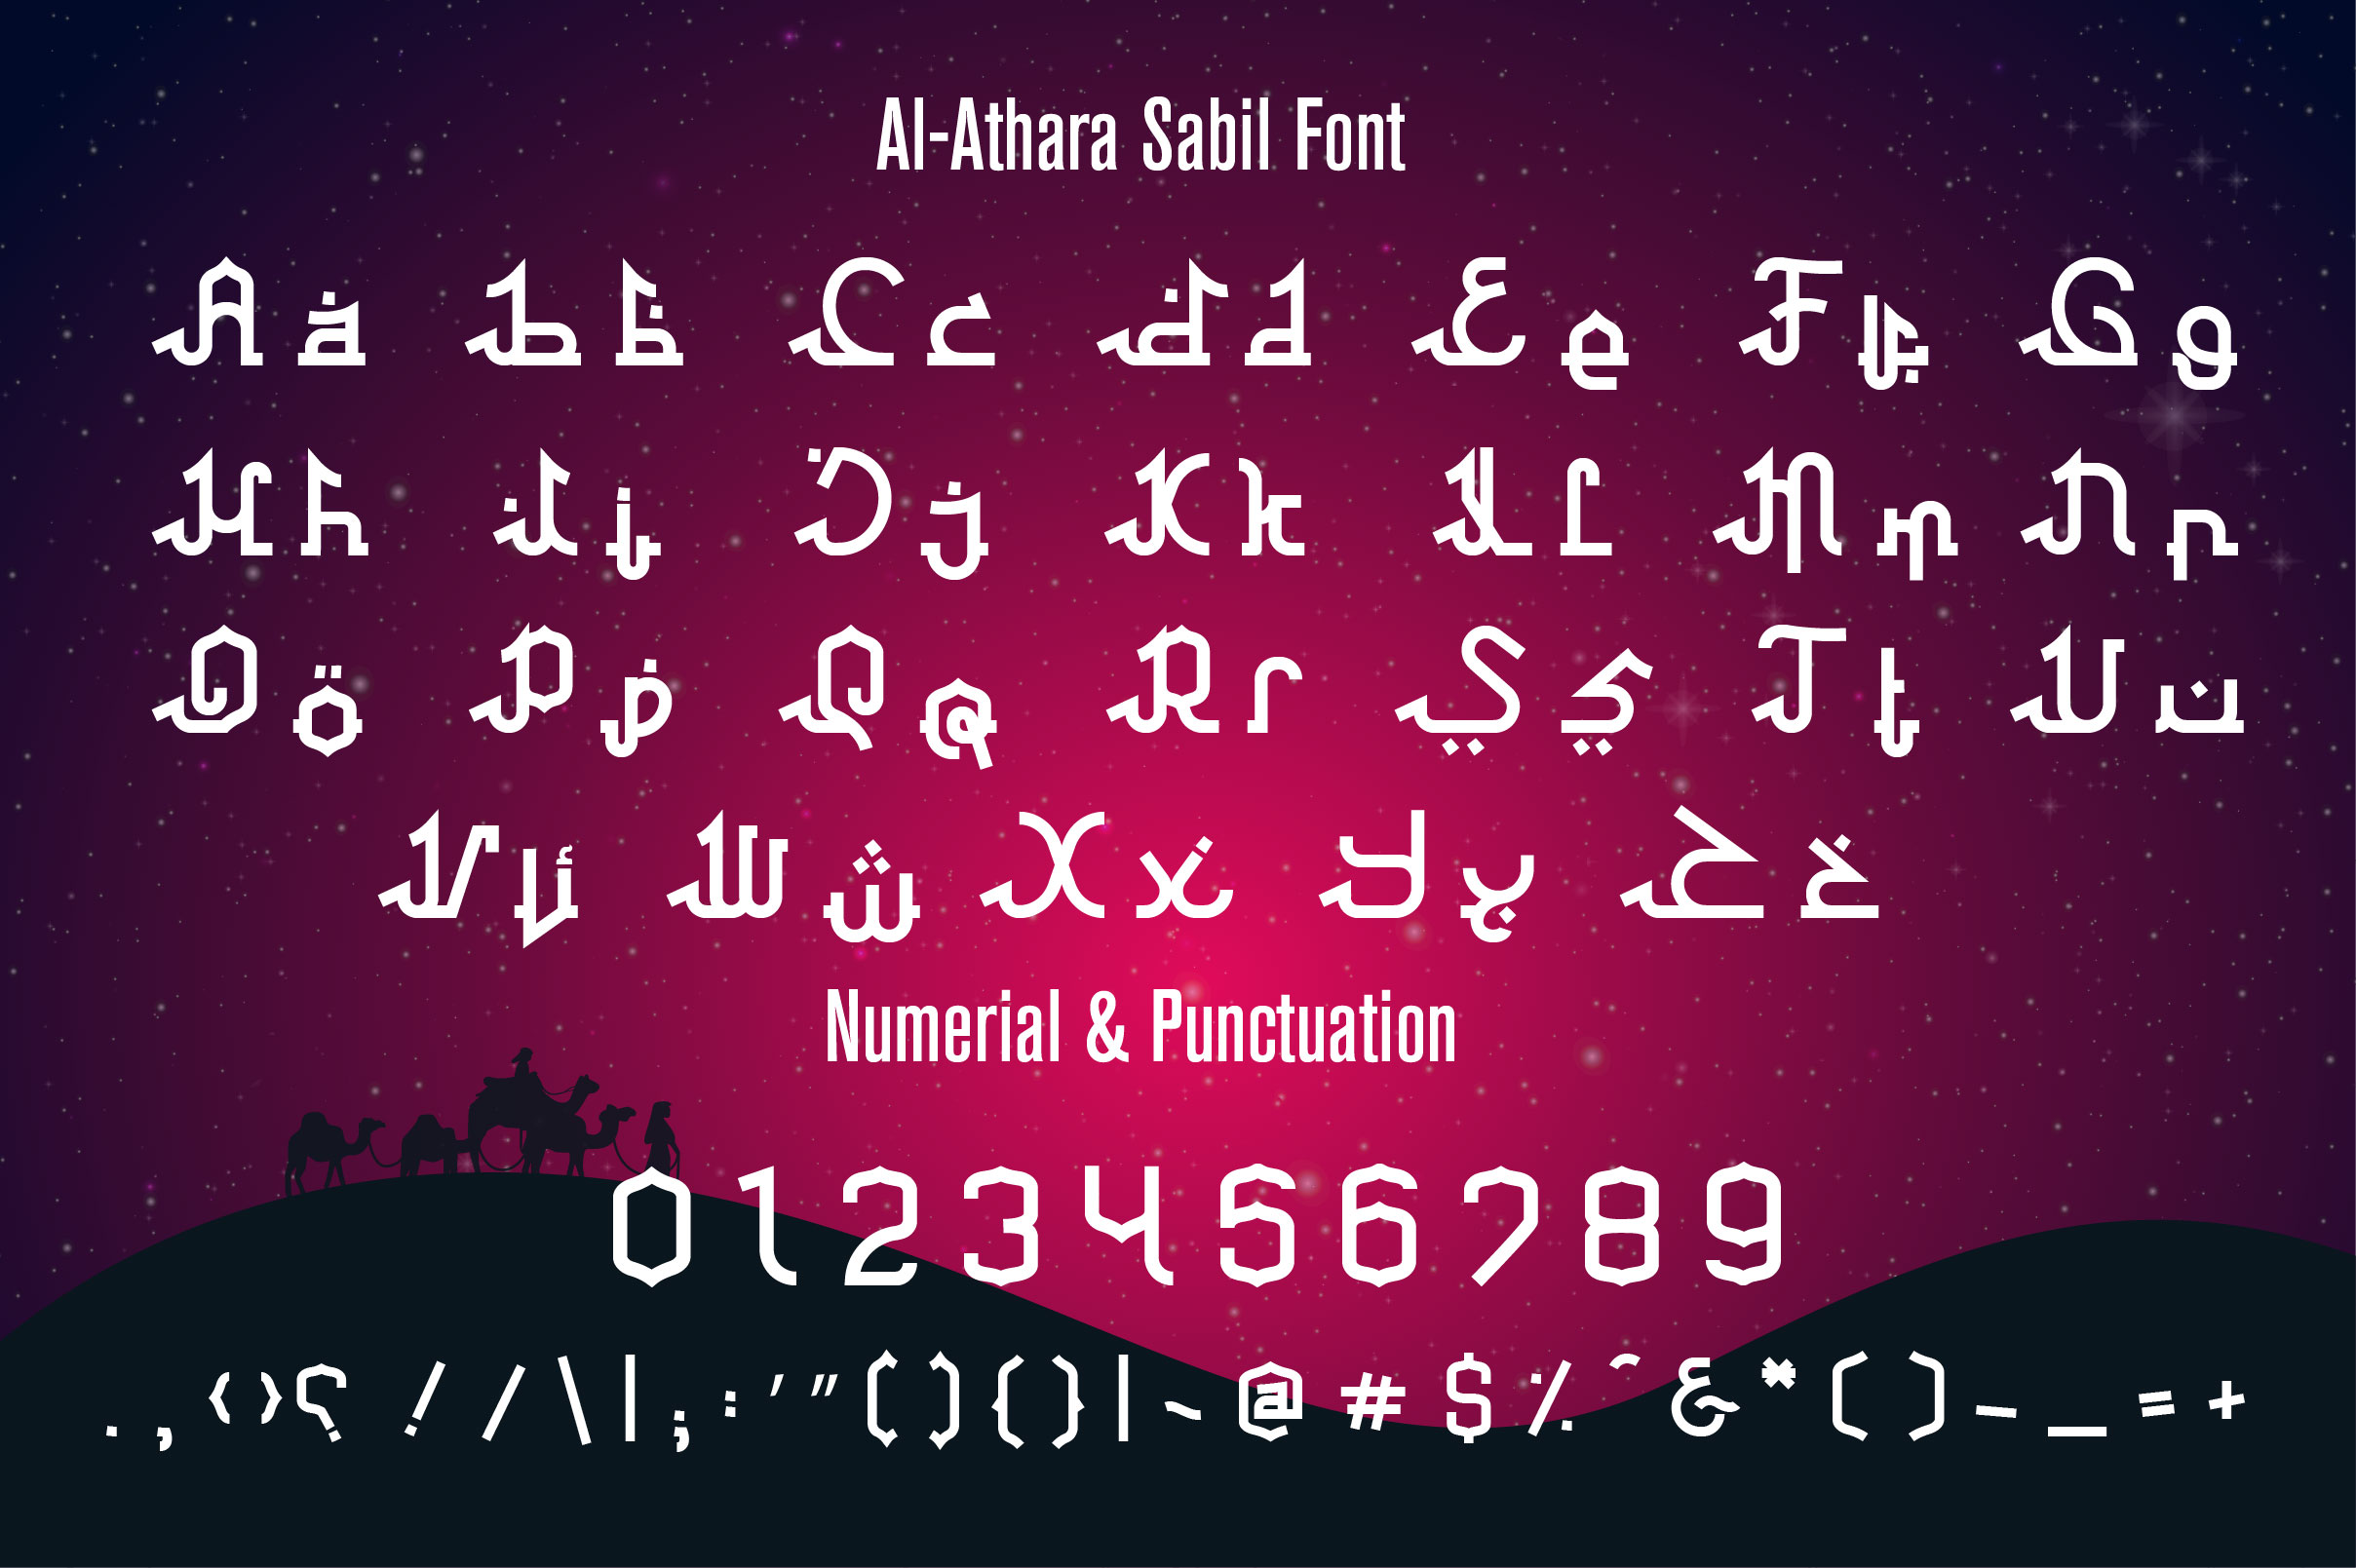 Download Free Al Athara Sabil Font Free Download Similar Fonts Fontget Fonts Typography